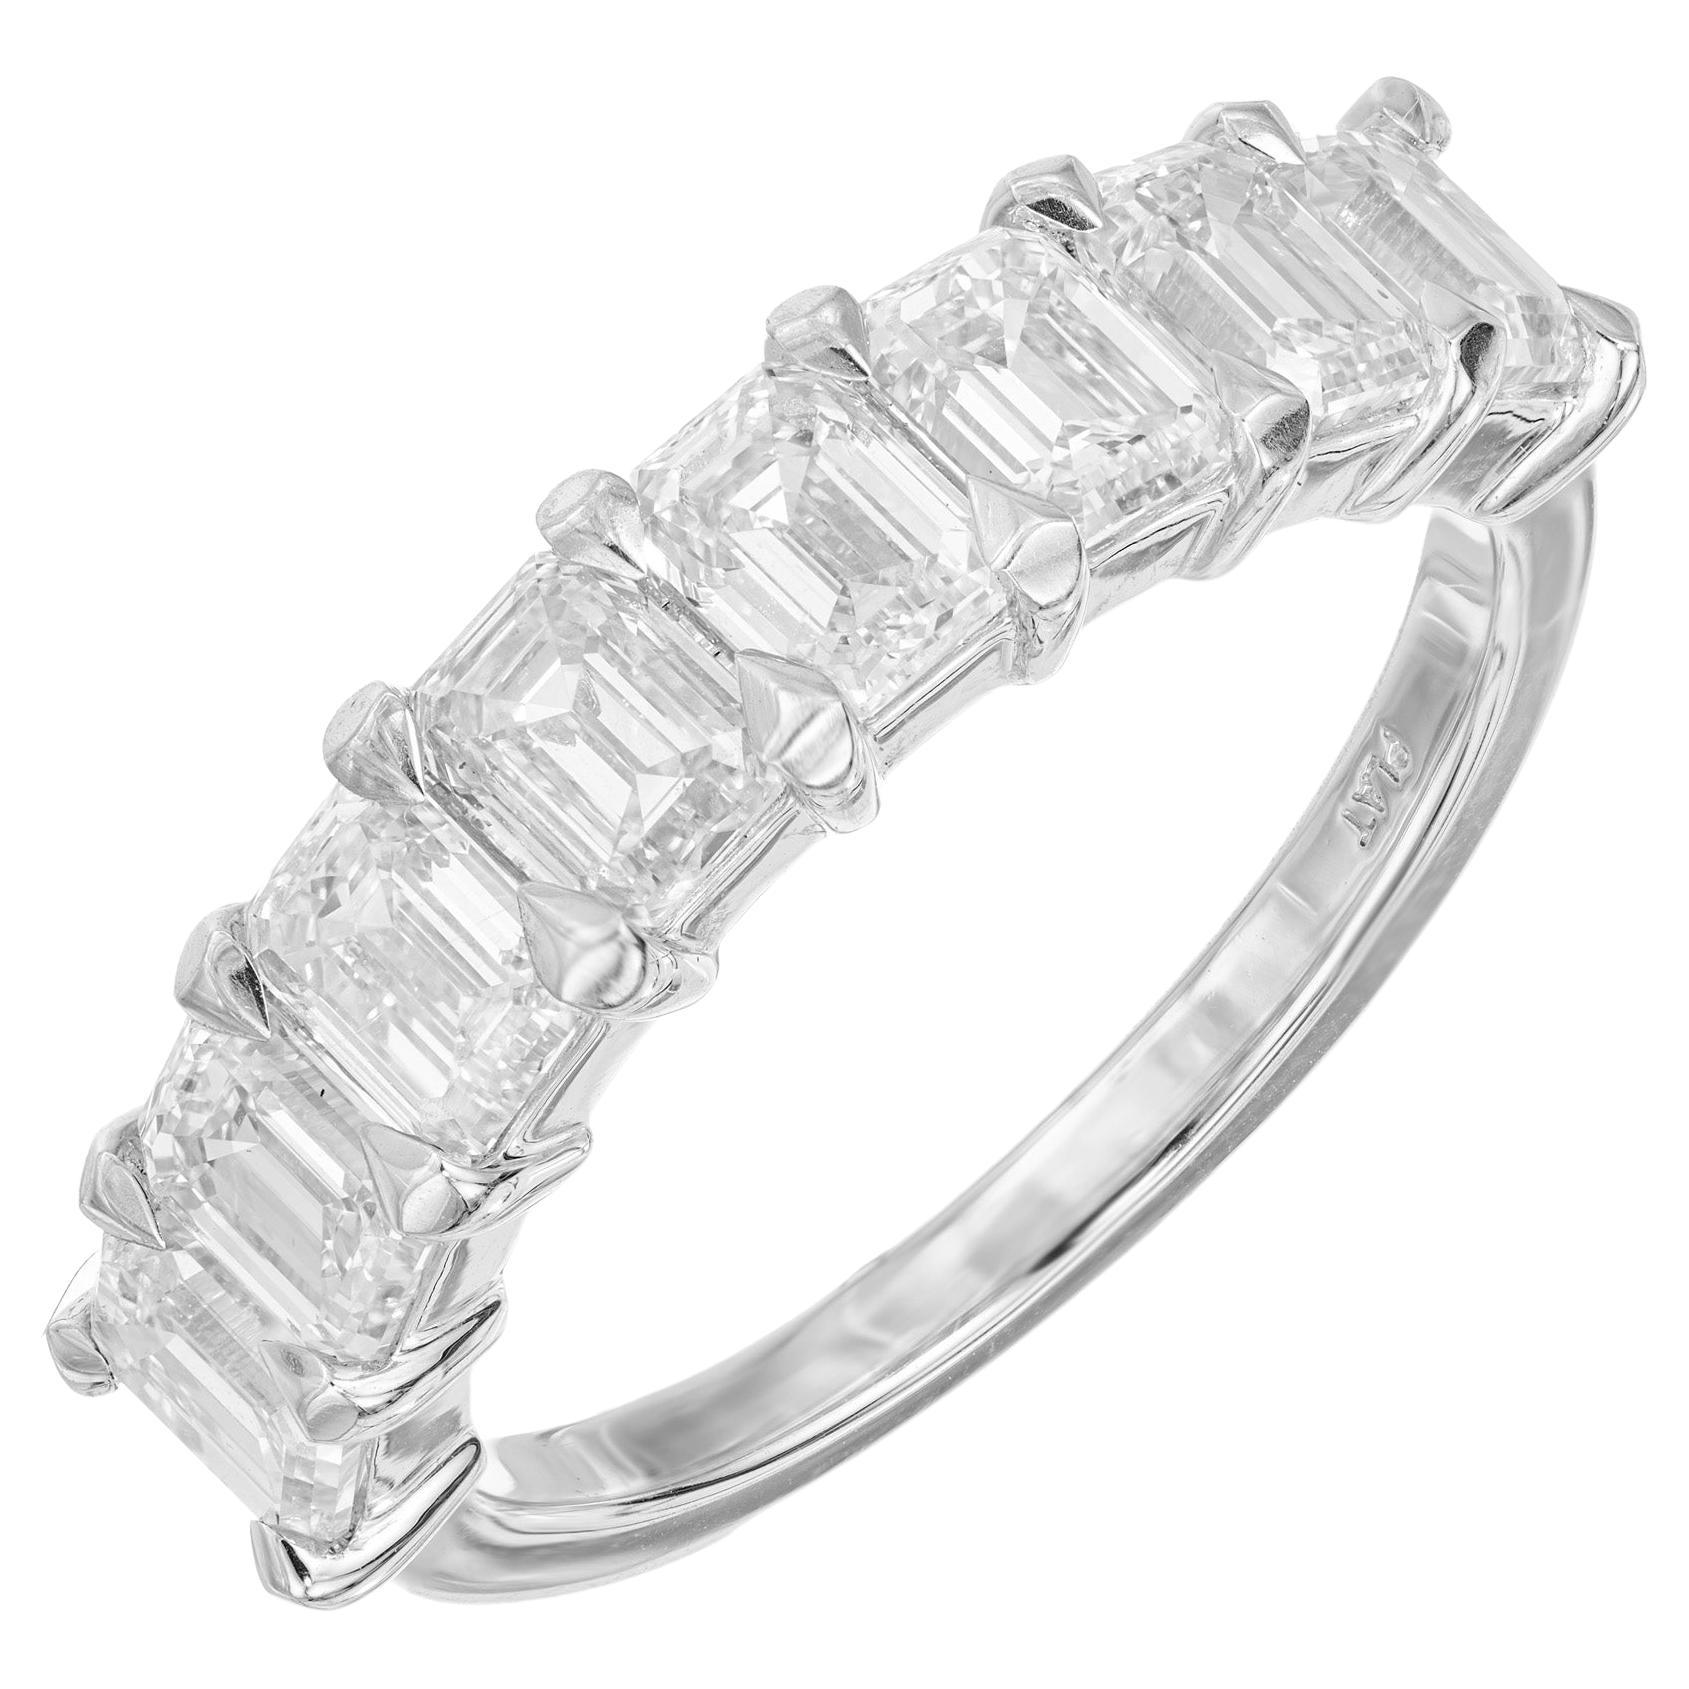 Peter Suchy 2.48 Carat Emerald Cut Diamond Platinum Wedding Band Ring